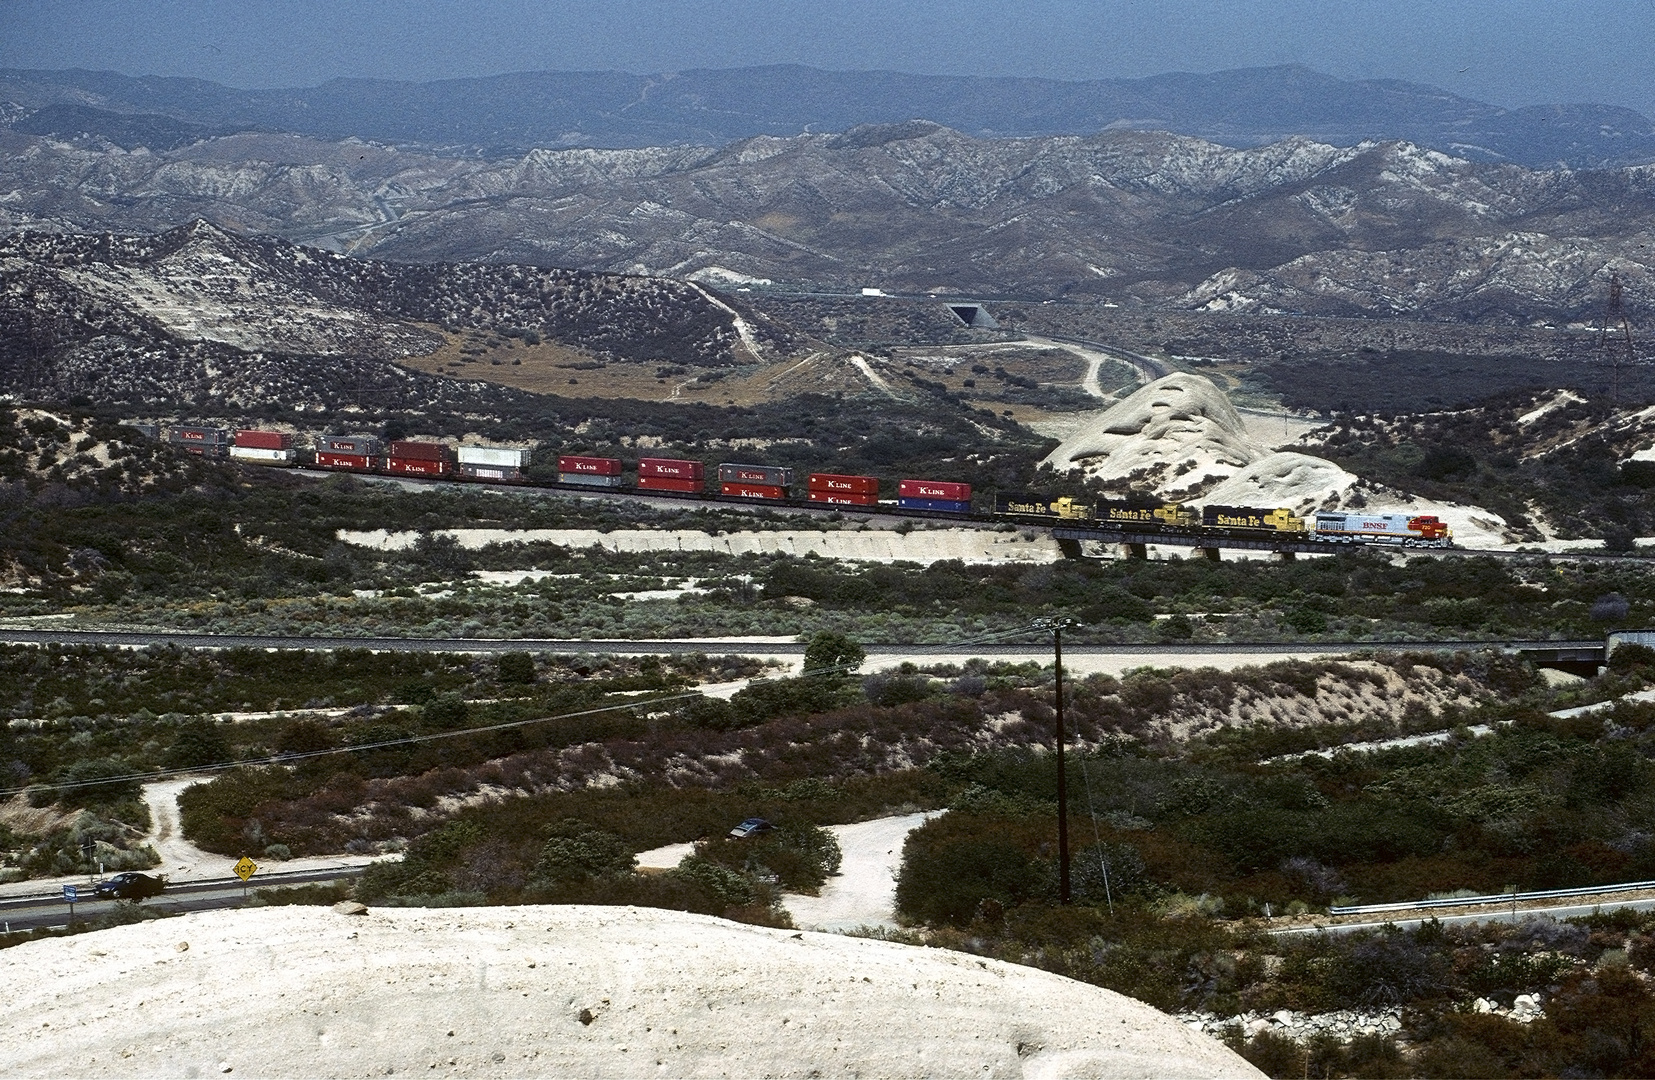 San Bernardino Mountain , Cajon Pass Area, BNSF Freight Train